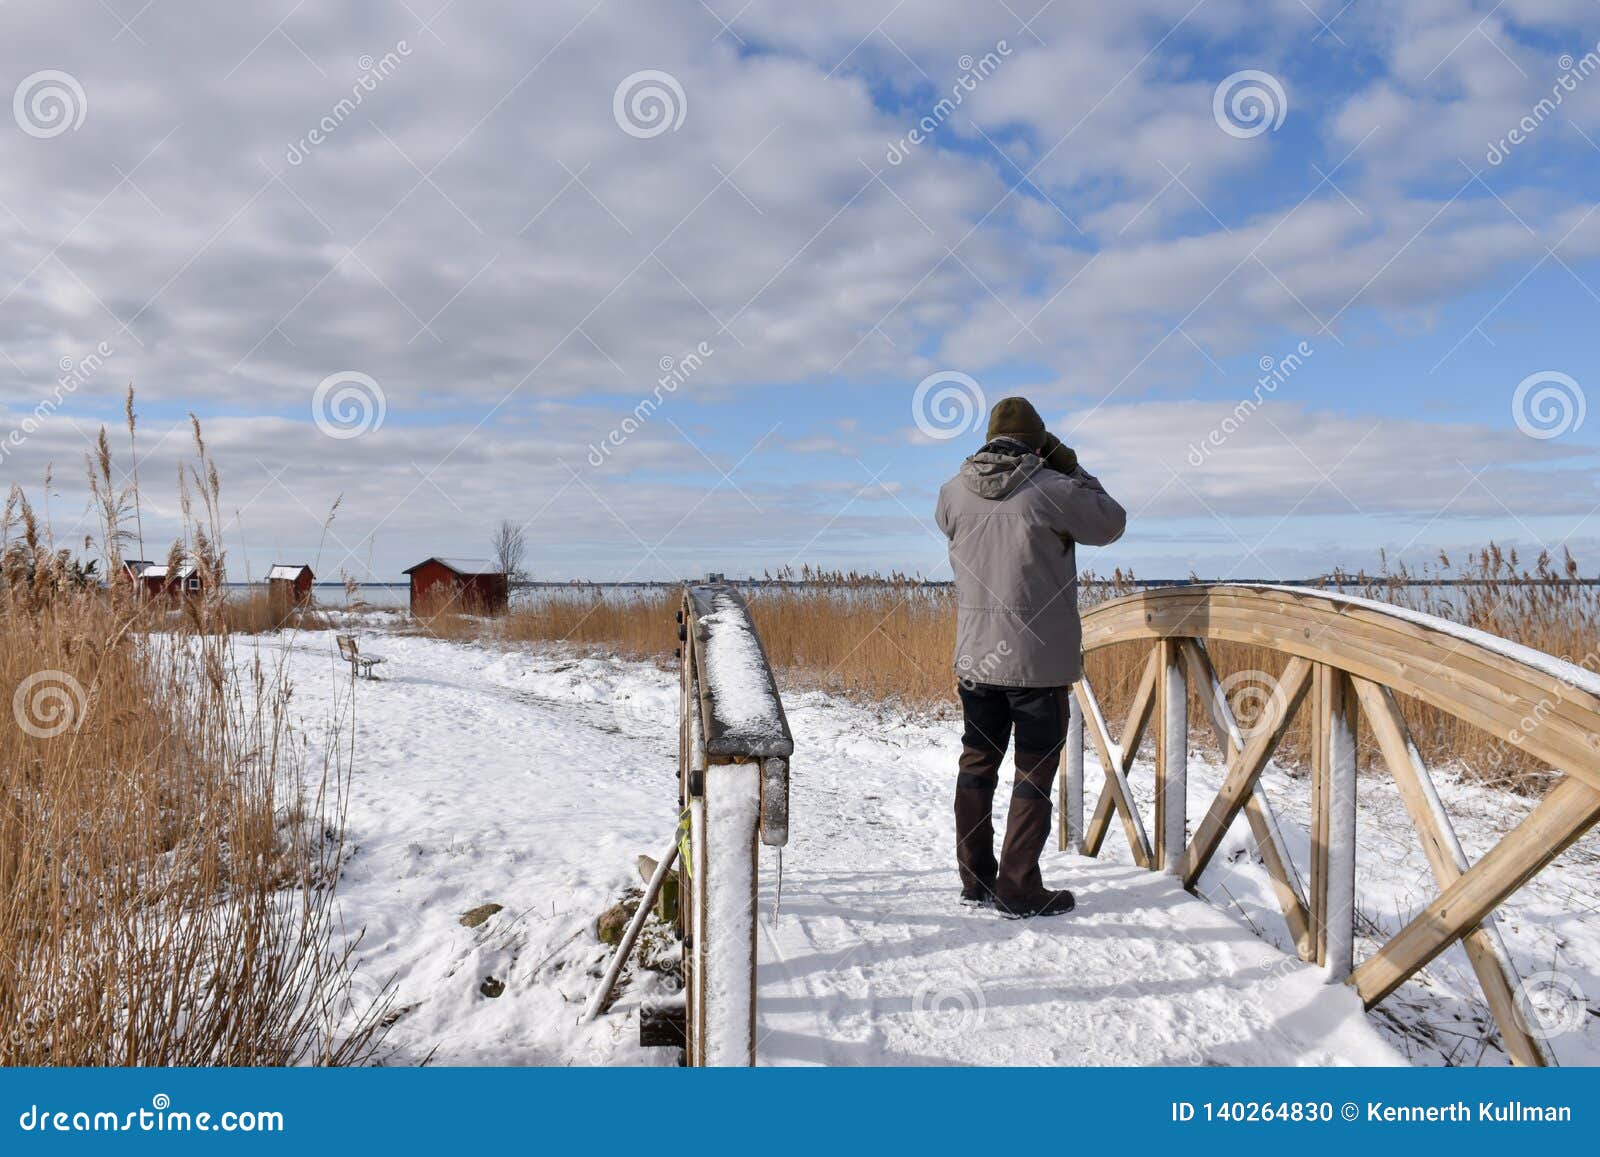 birder on a wooden footbridge